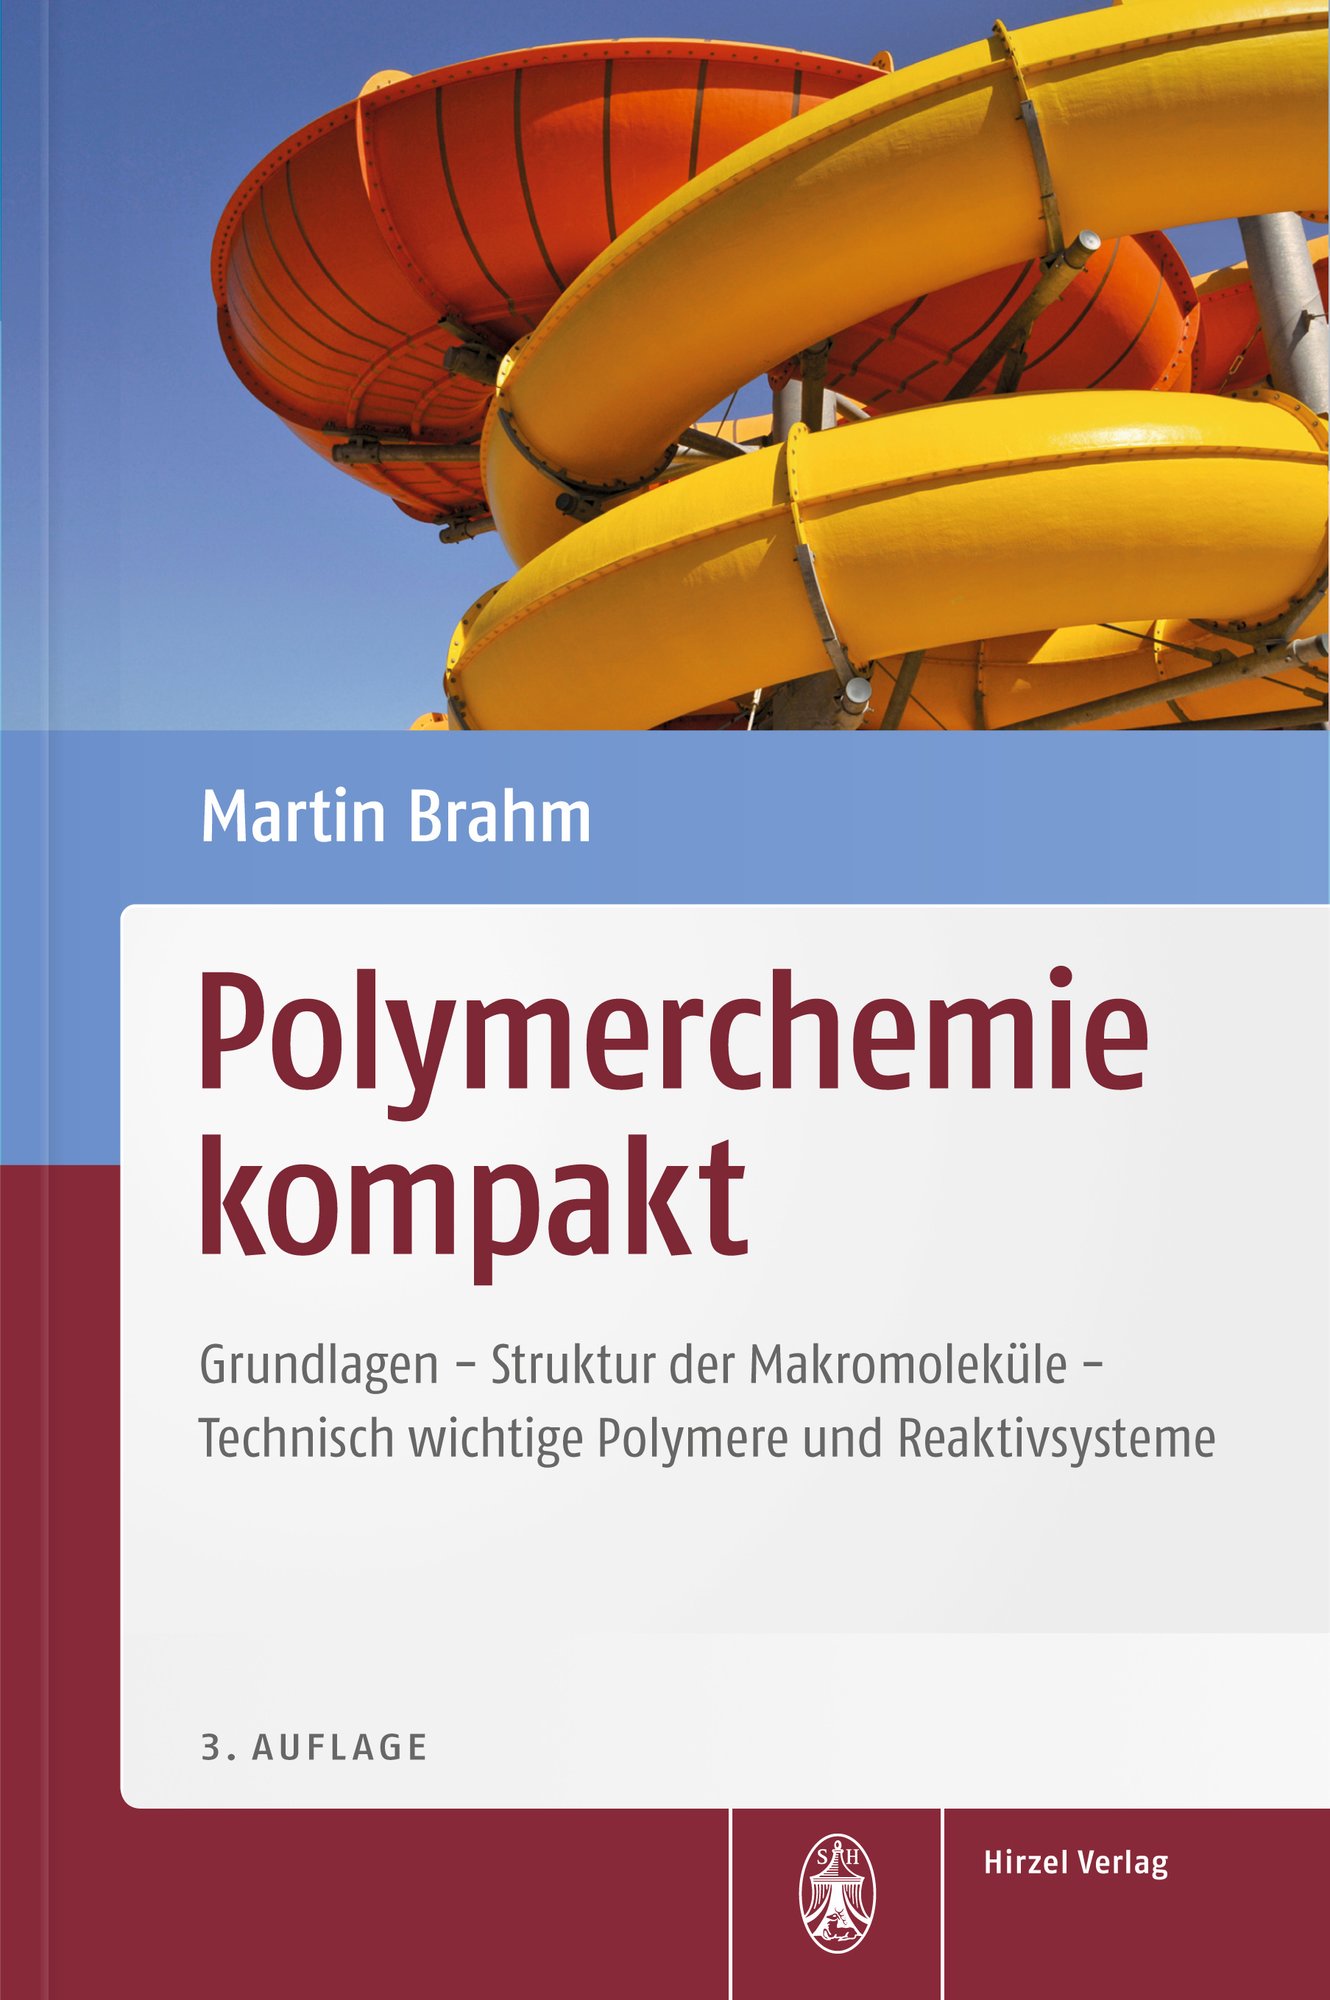 Polymerchemie kompakt